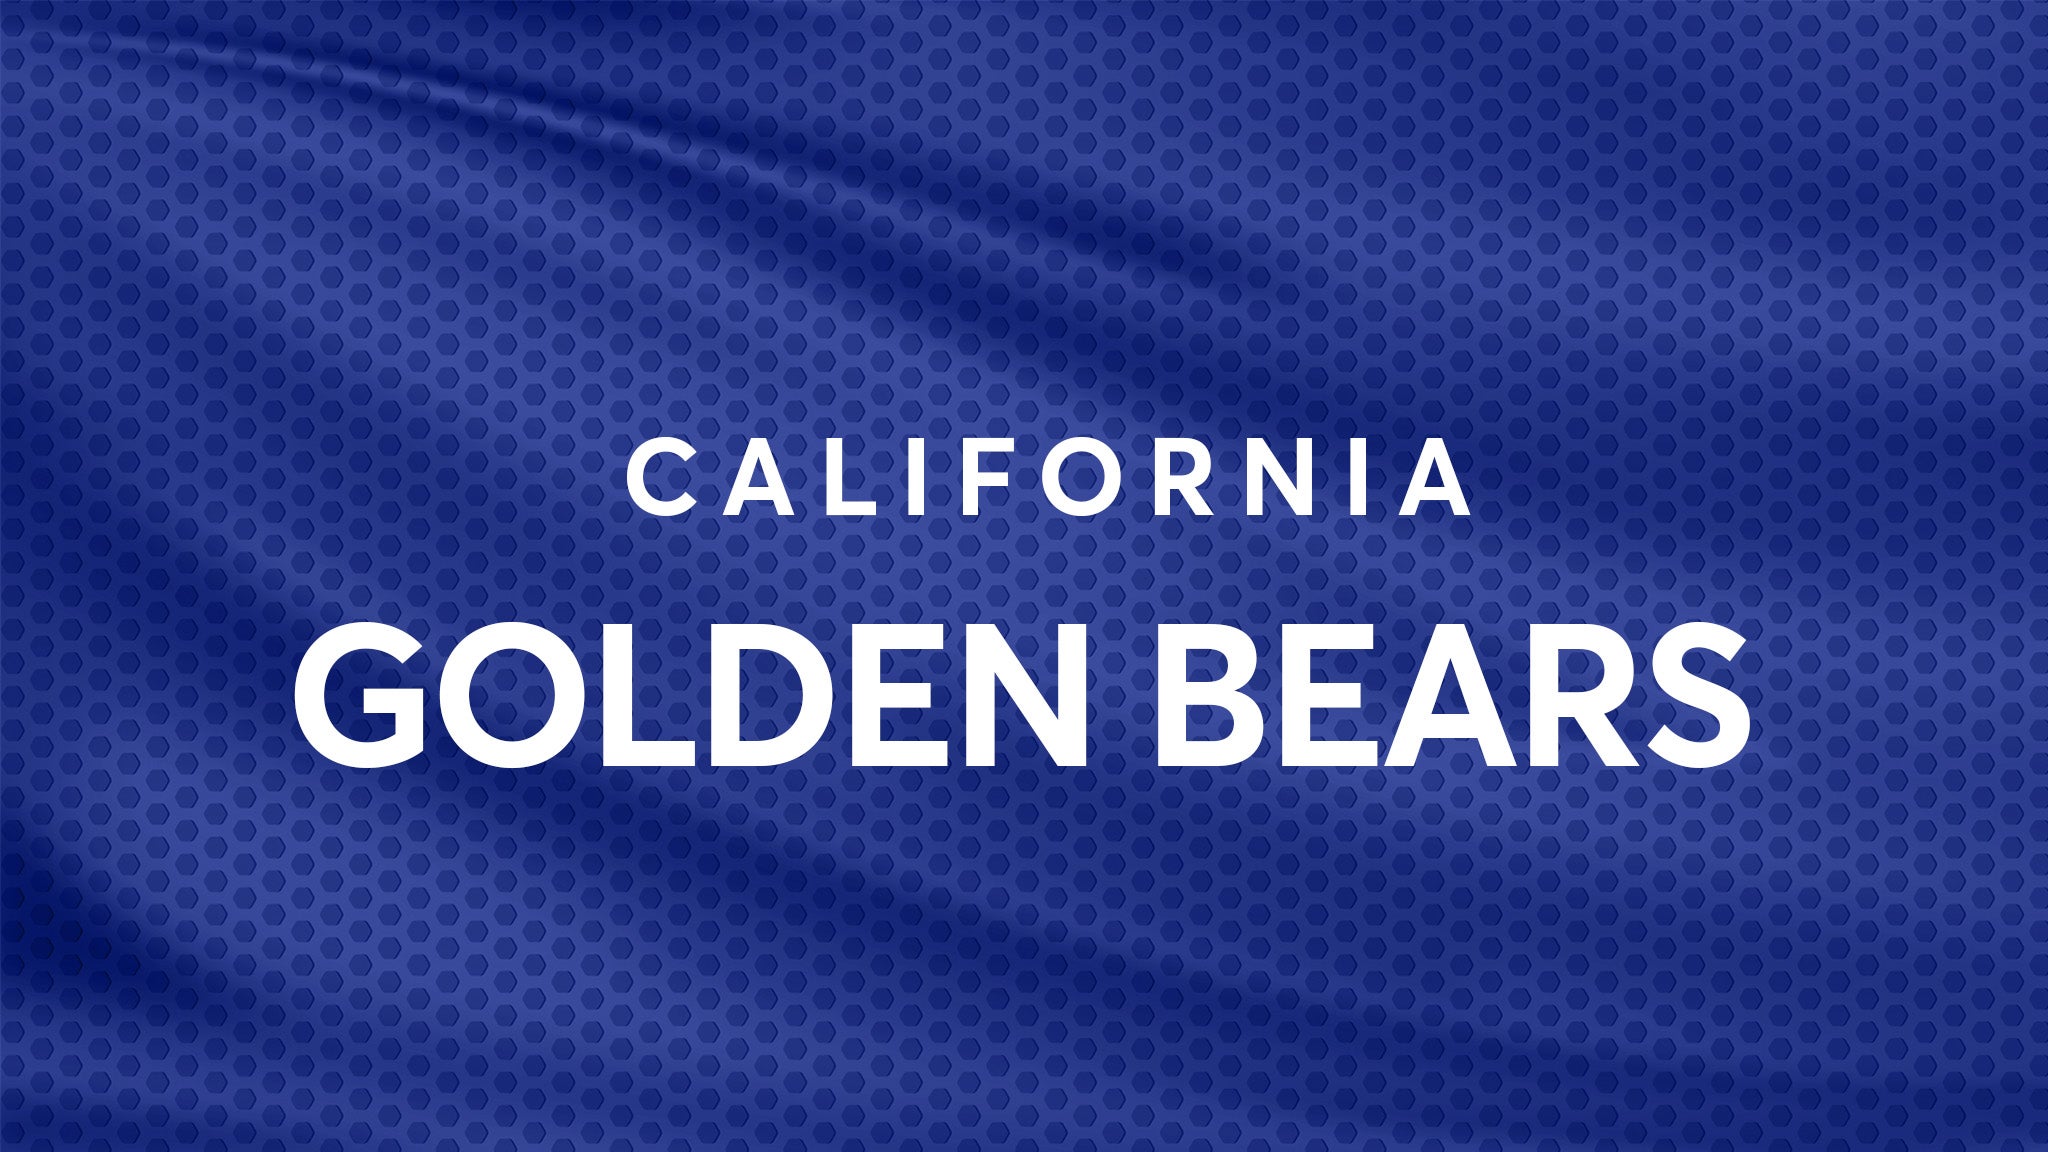 California Golden Bears Football vs. Oregon State Beavers Football hero